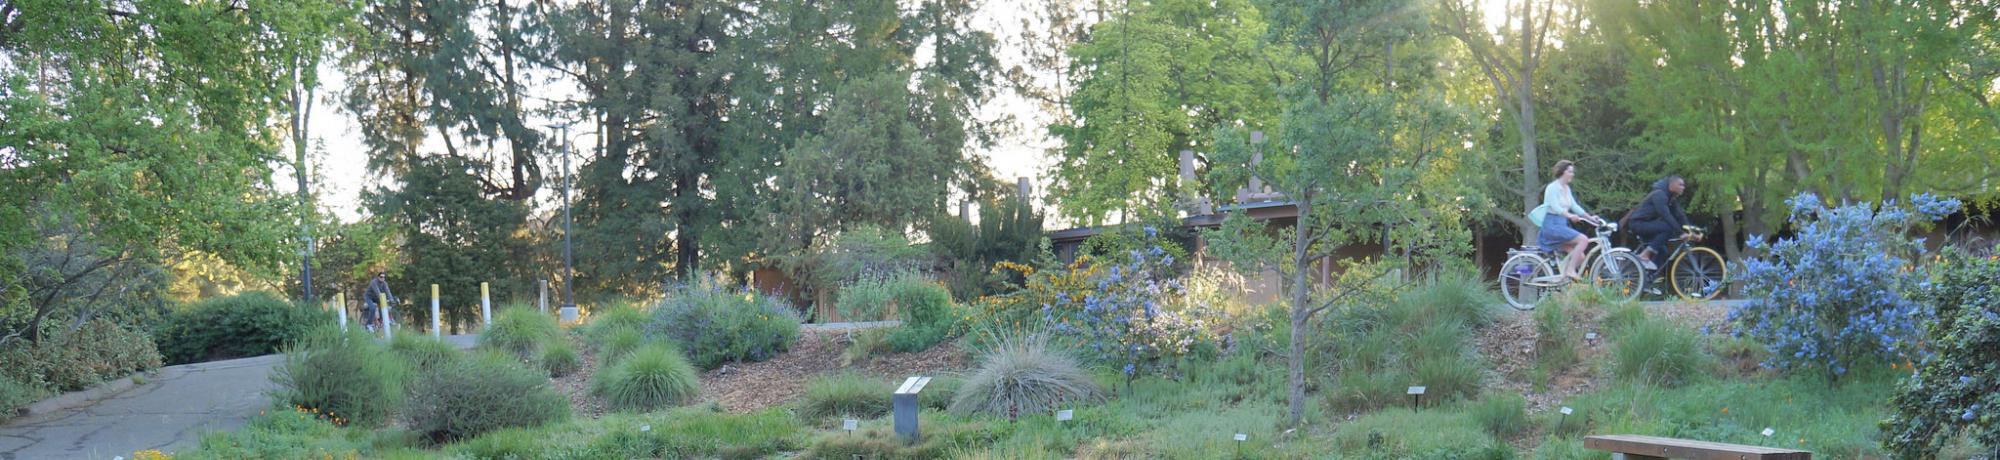 Image of the original California lawn demonstration garden in the UC Davis Arboretum's Mary Wattis Brown Garden of California native plants.